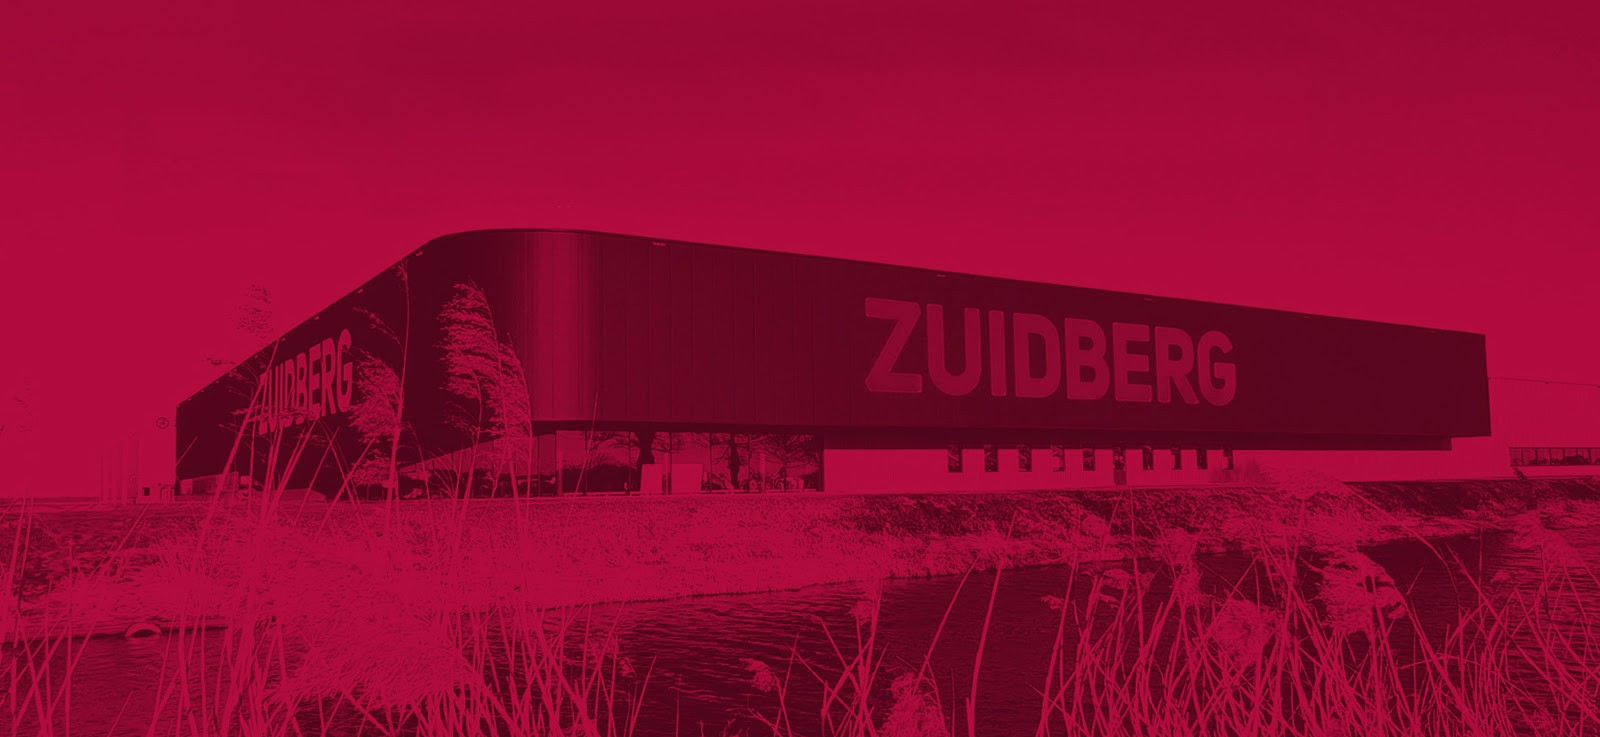 Zuidberg Newsletter June 2022